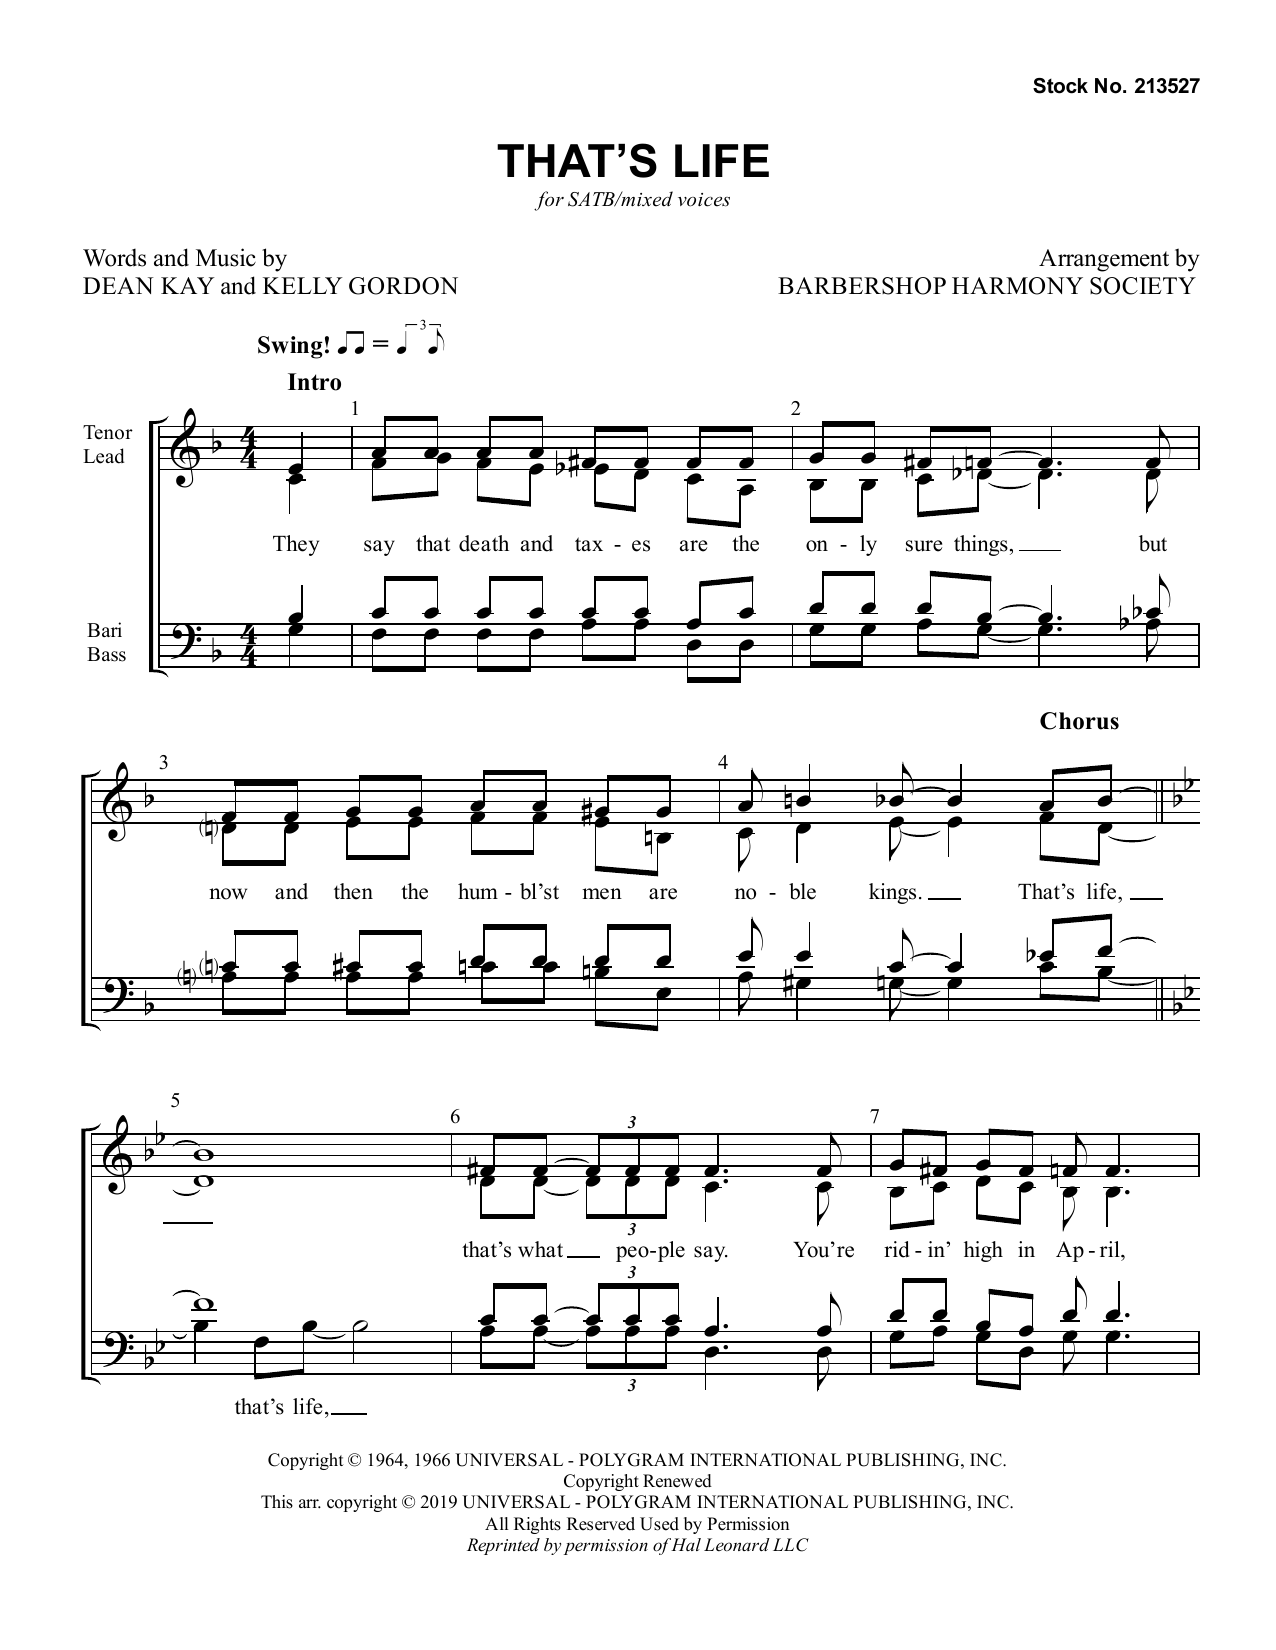 Dean Kay & Kelly Gordon That's Life (arr. Barbershop Harmony Society) Sheet Music Notes & Chords for TTBB Choir - Download or Print PDF